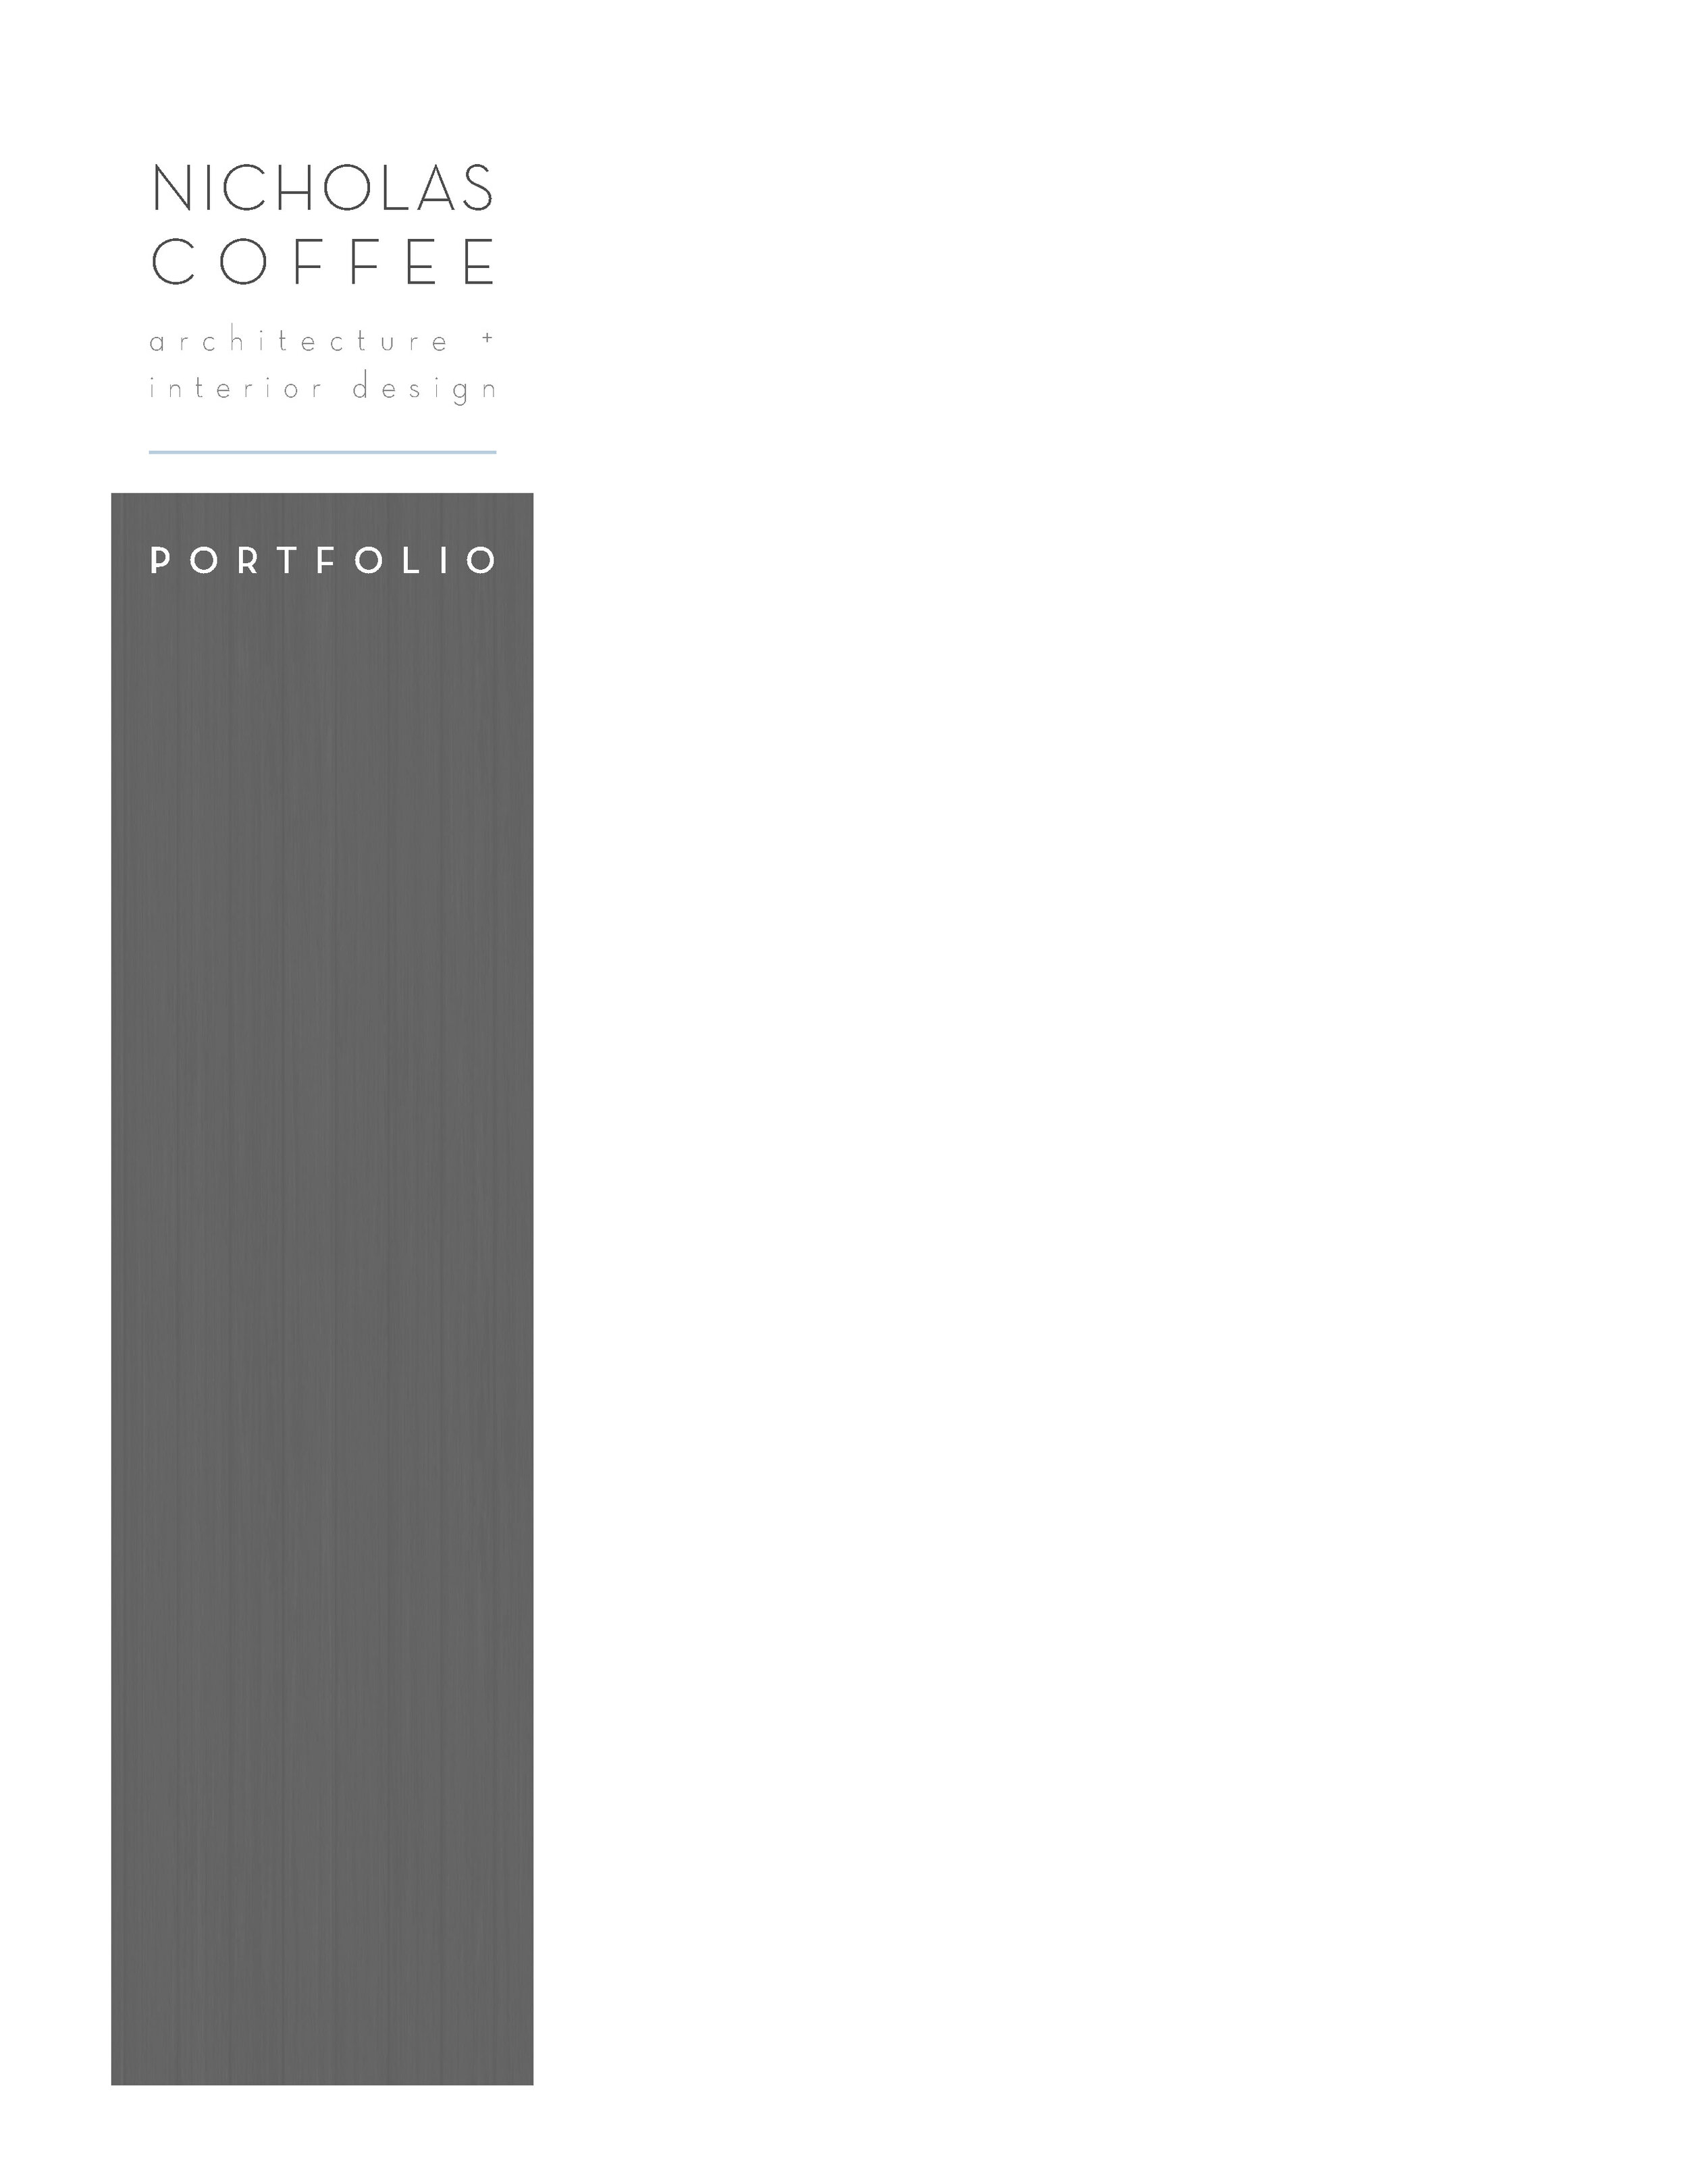 _Nicholas Coffee_Portfolio Cover.jpg